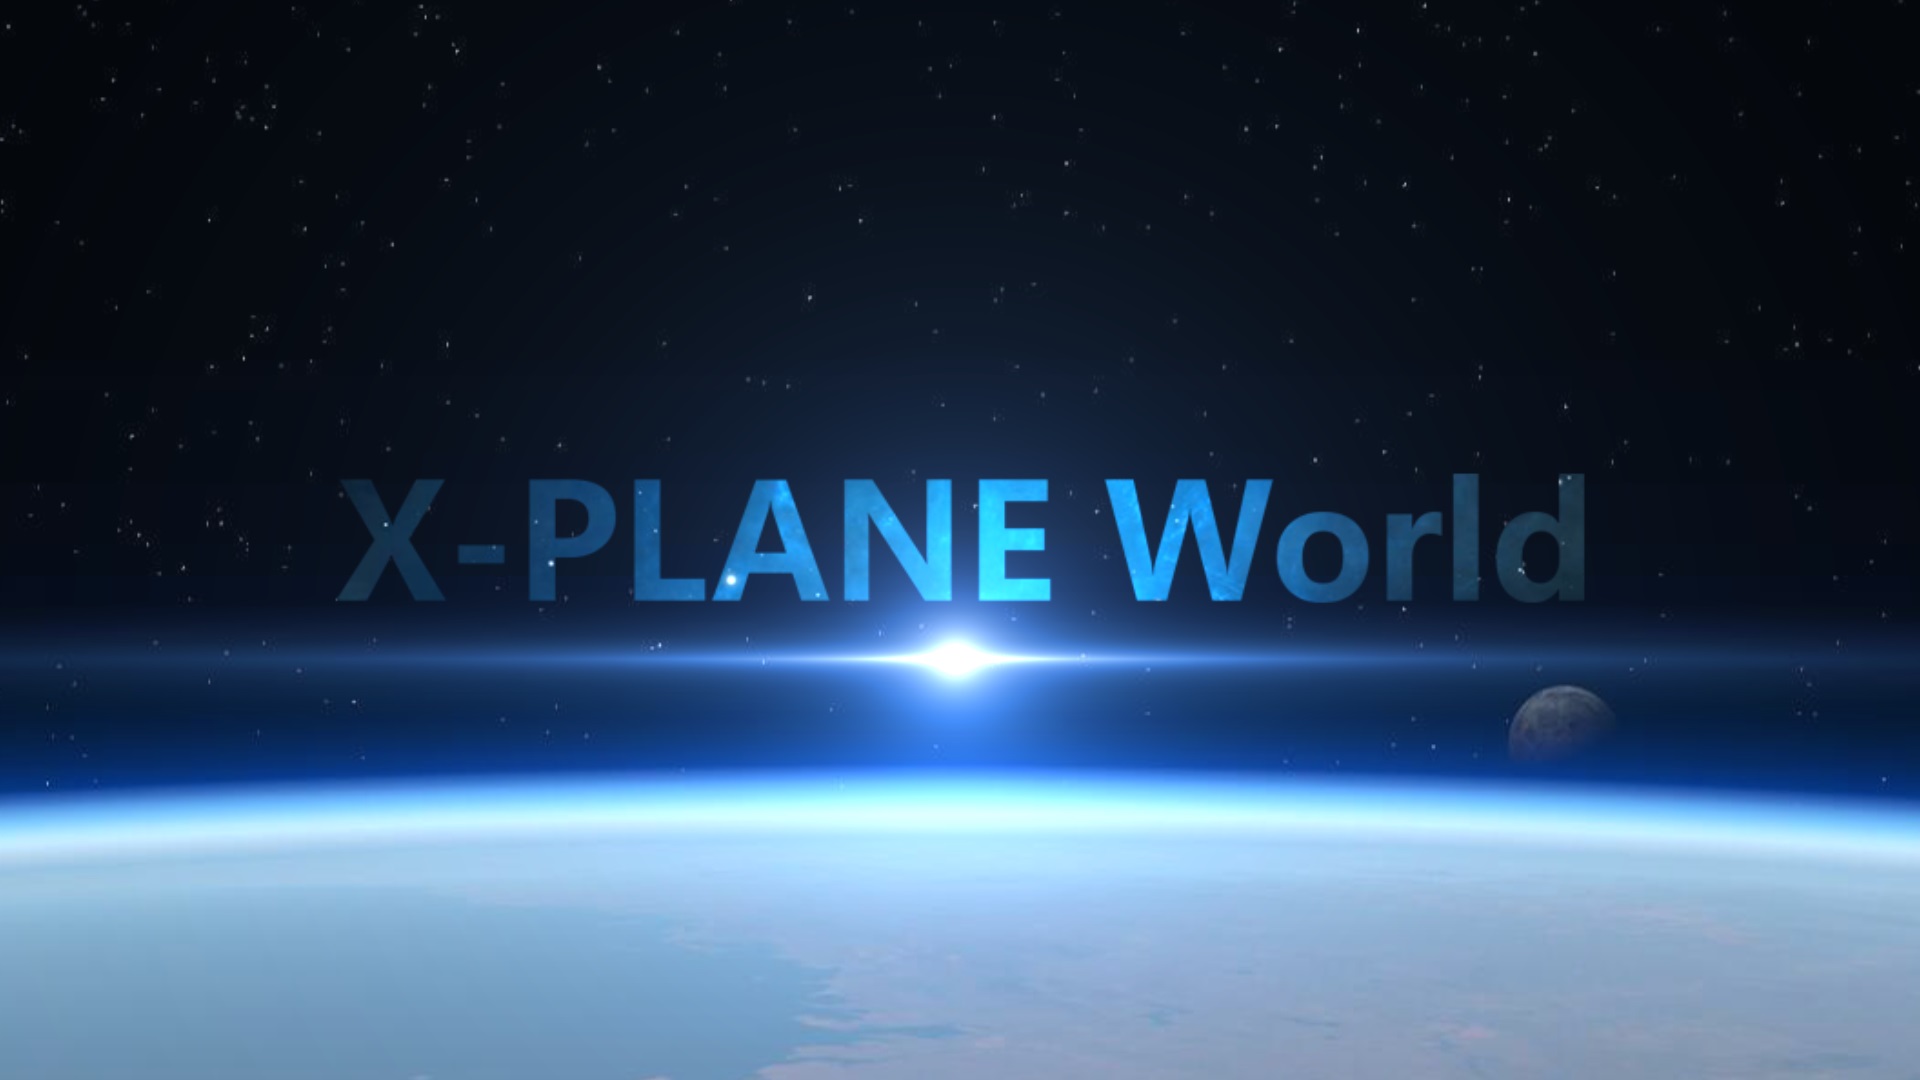 X-PLANE FILM - XP World-9231 